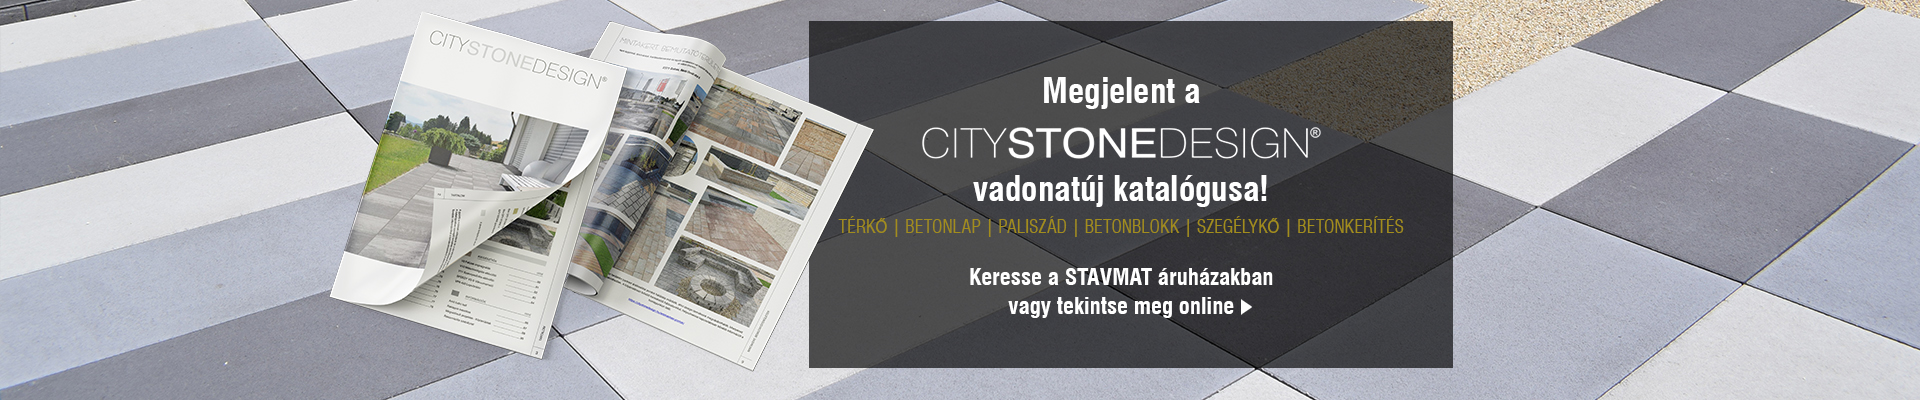 CityStoneDesign